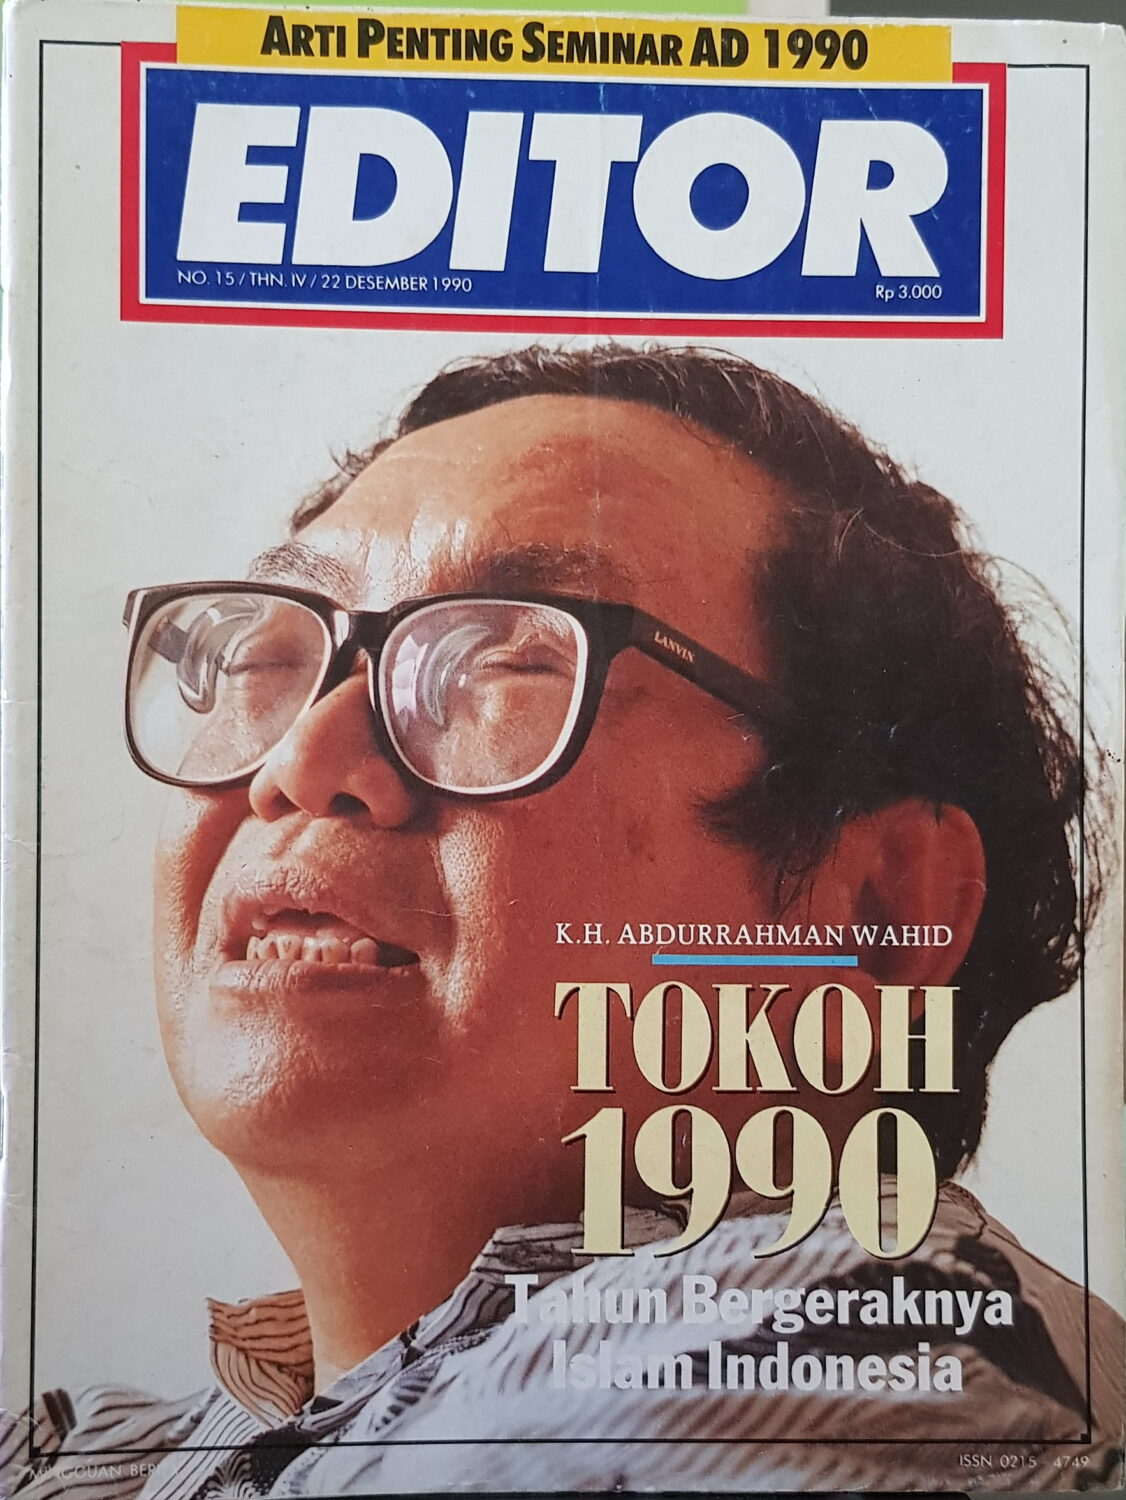 Editor, 22 Desember 1990